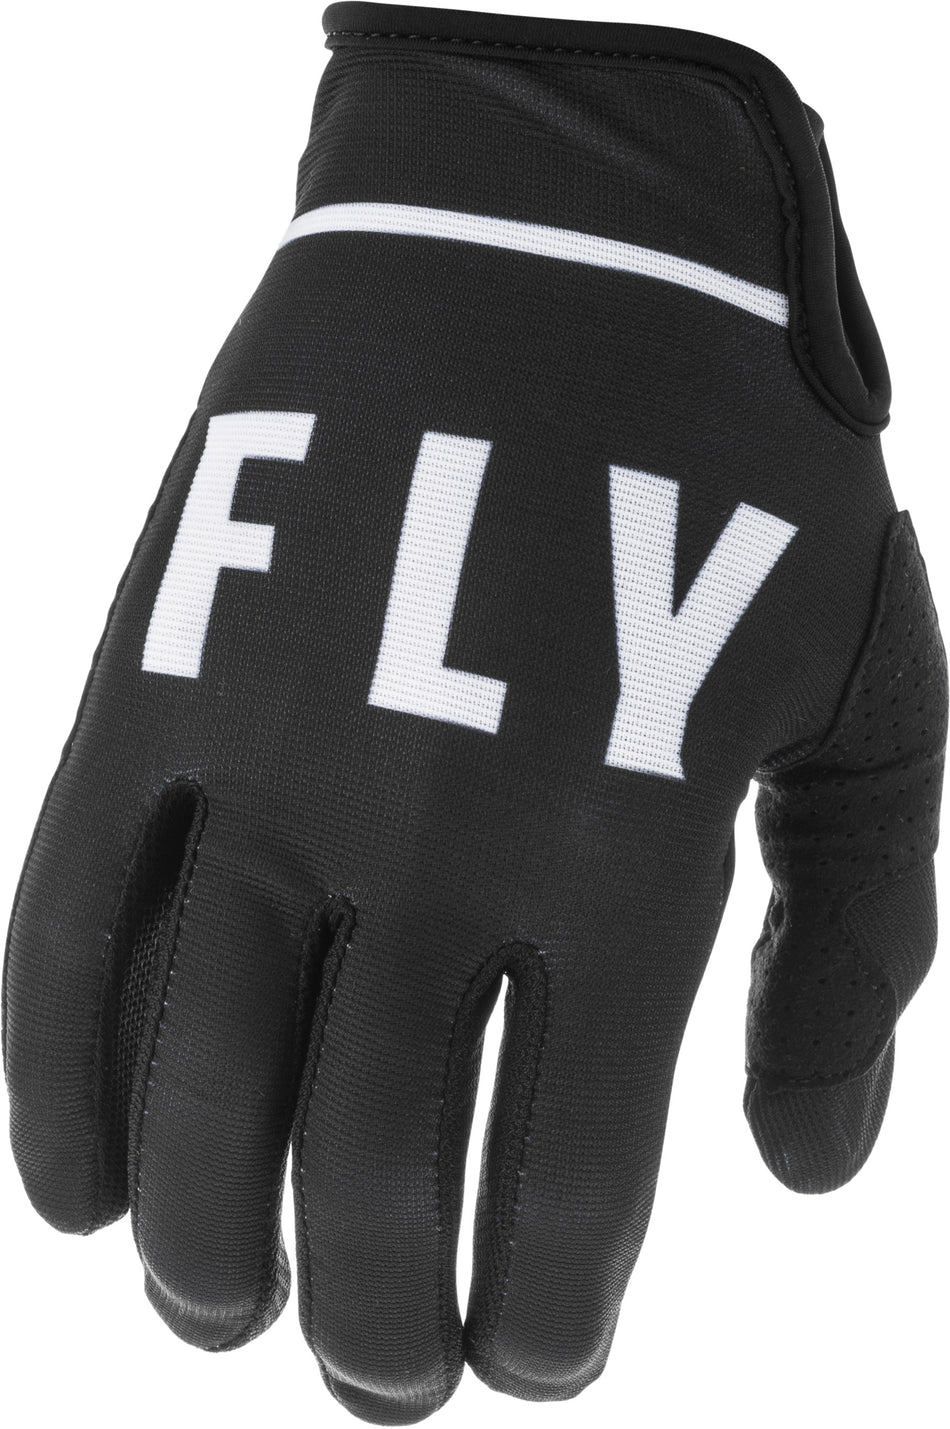 FLY RACING Lite Gloves Black/White Sz 13 373-71113